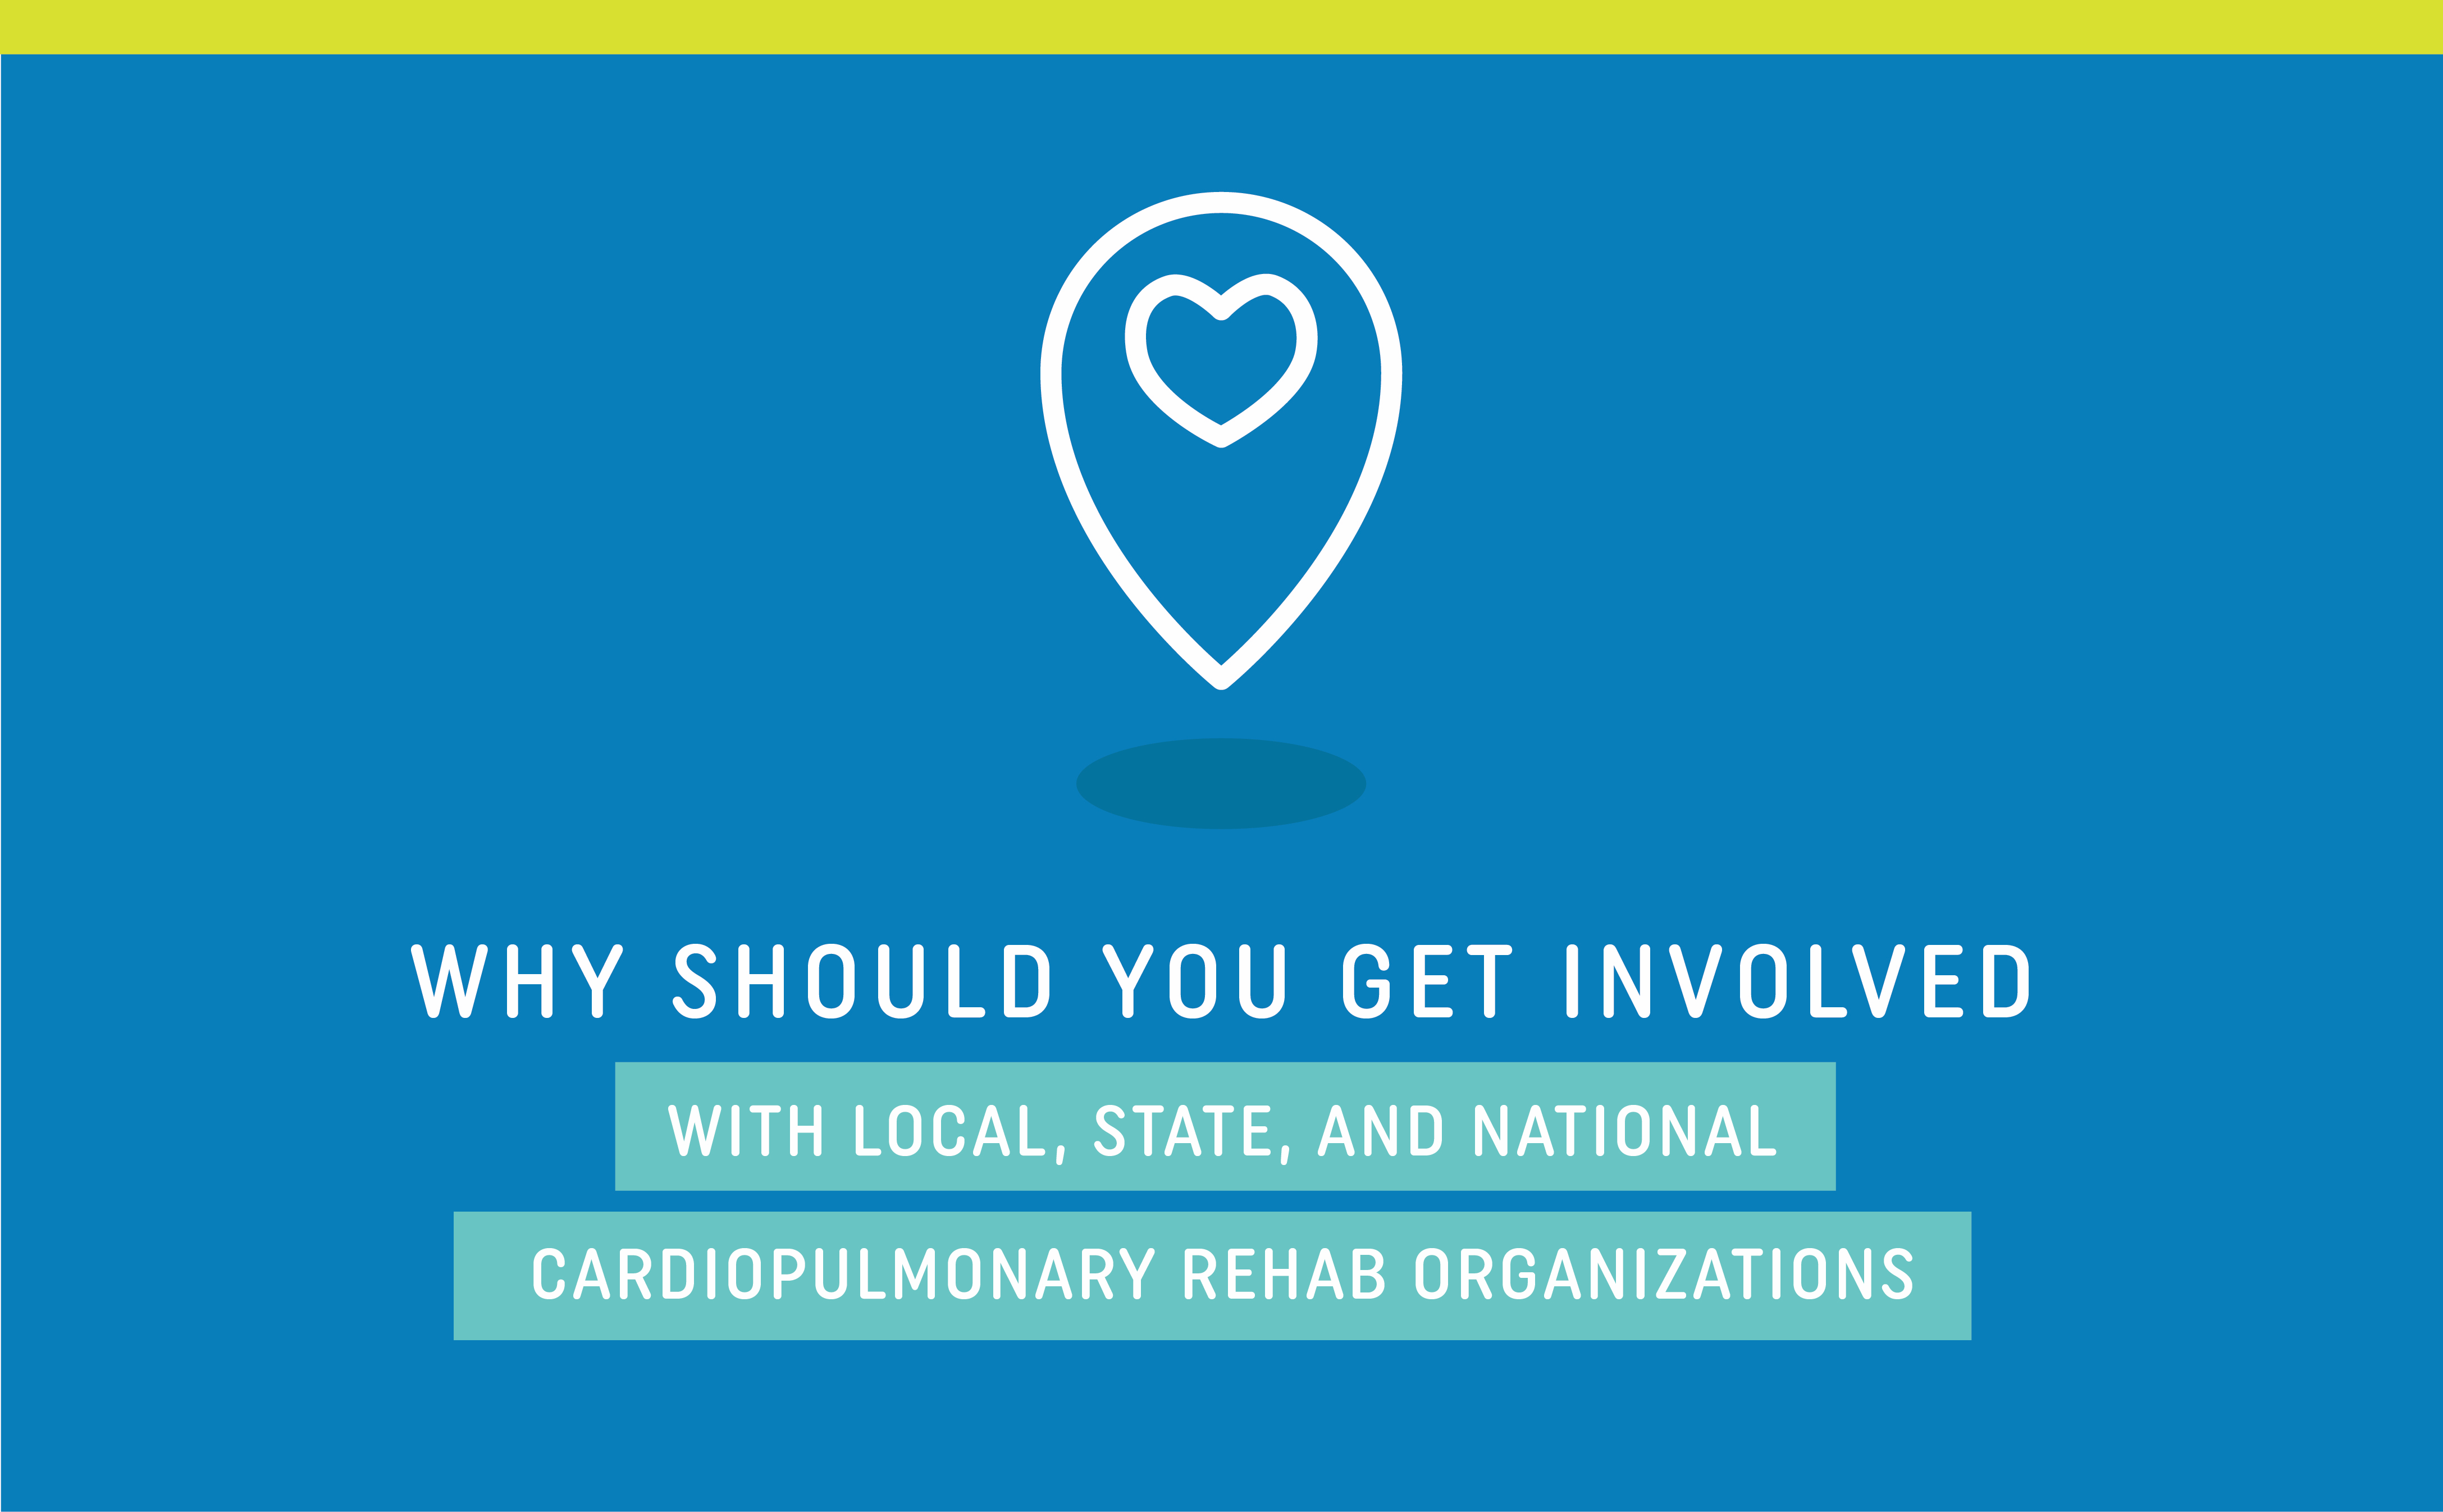 6 reasons to get involved with cardiopulmonary rehab organizations